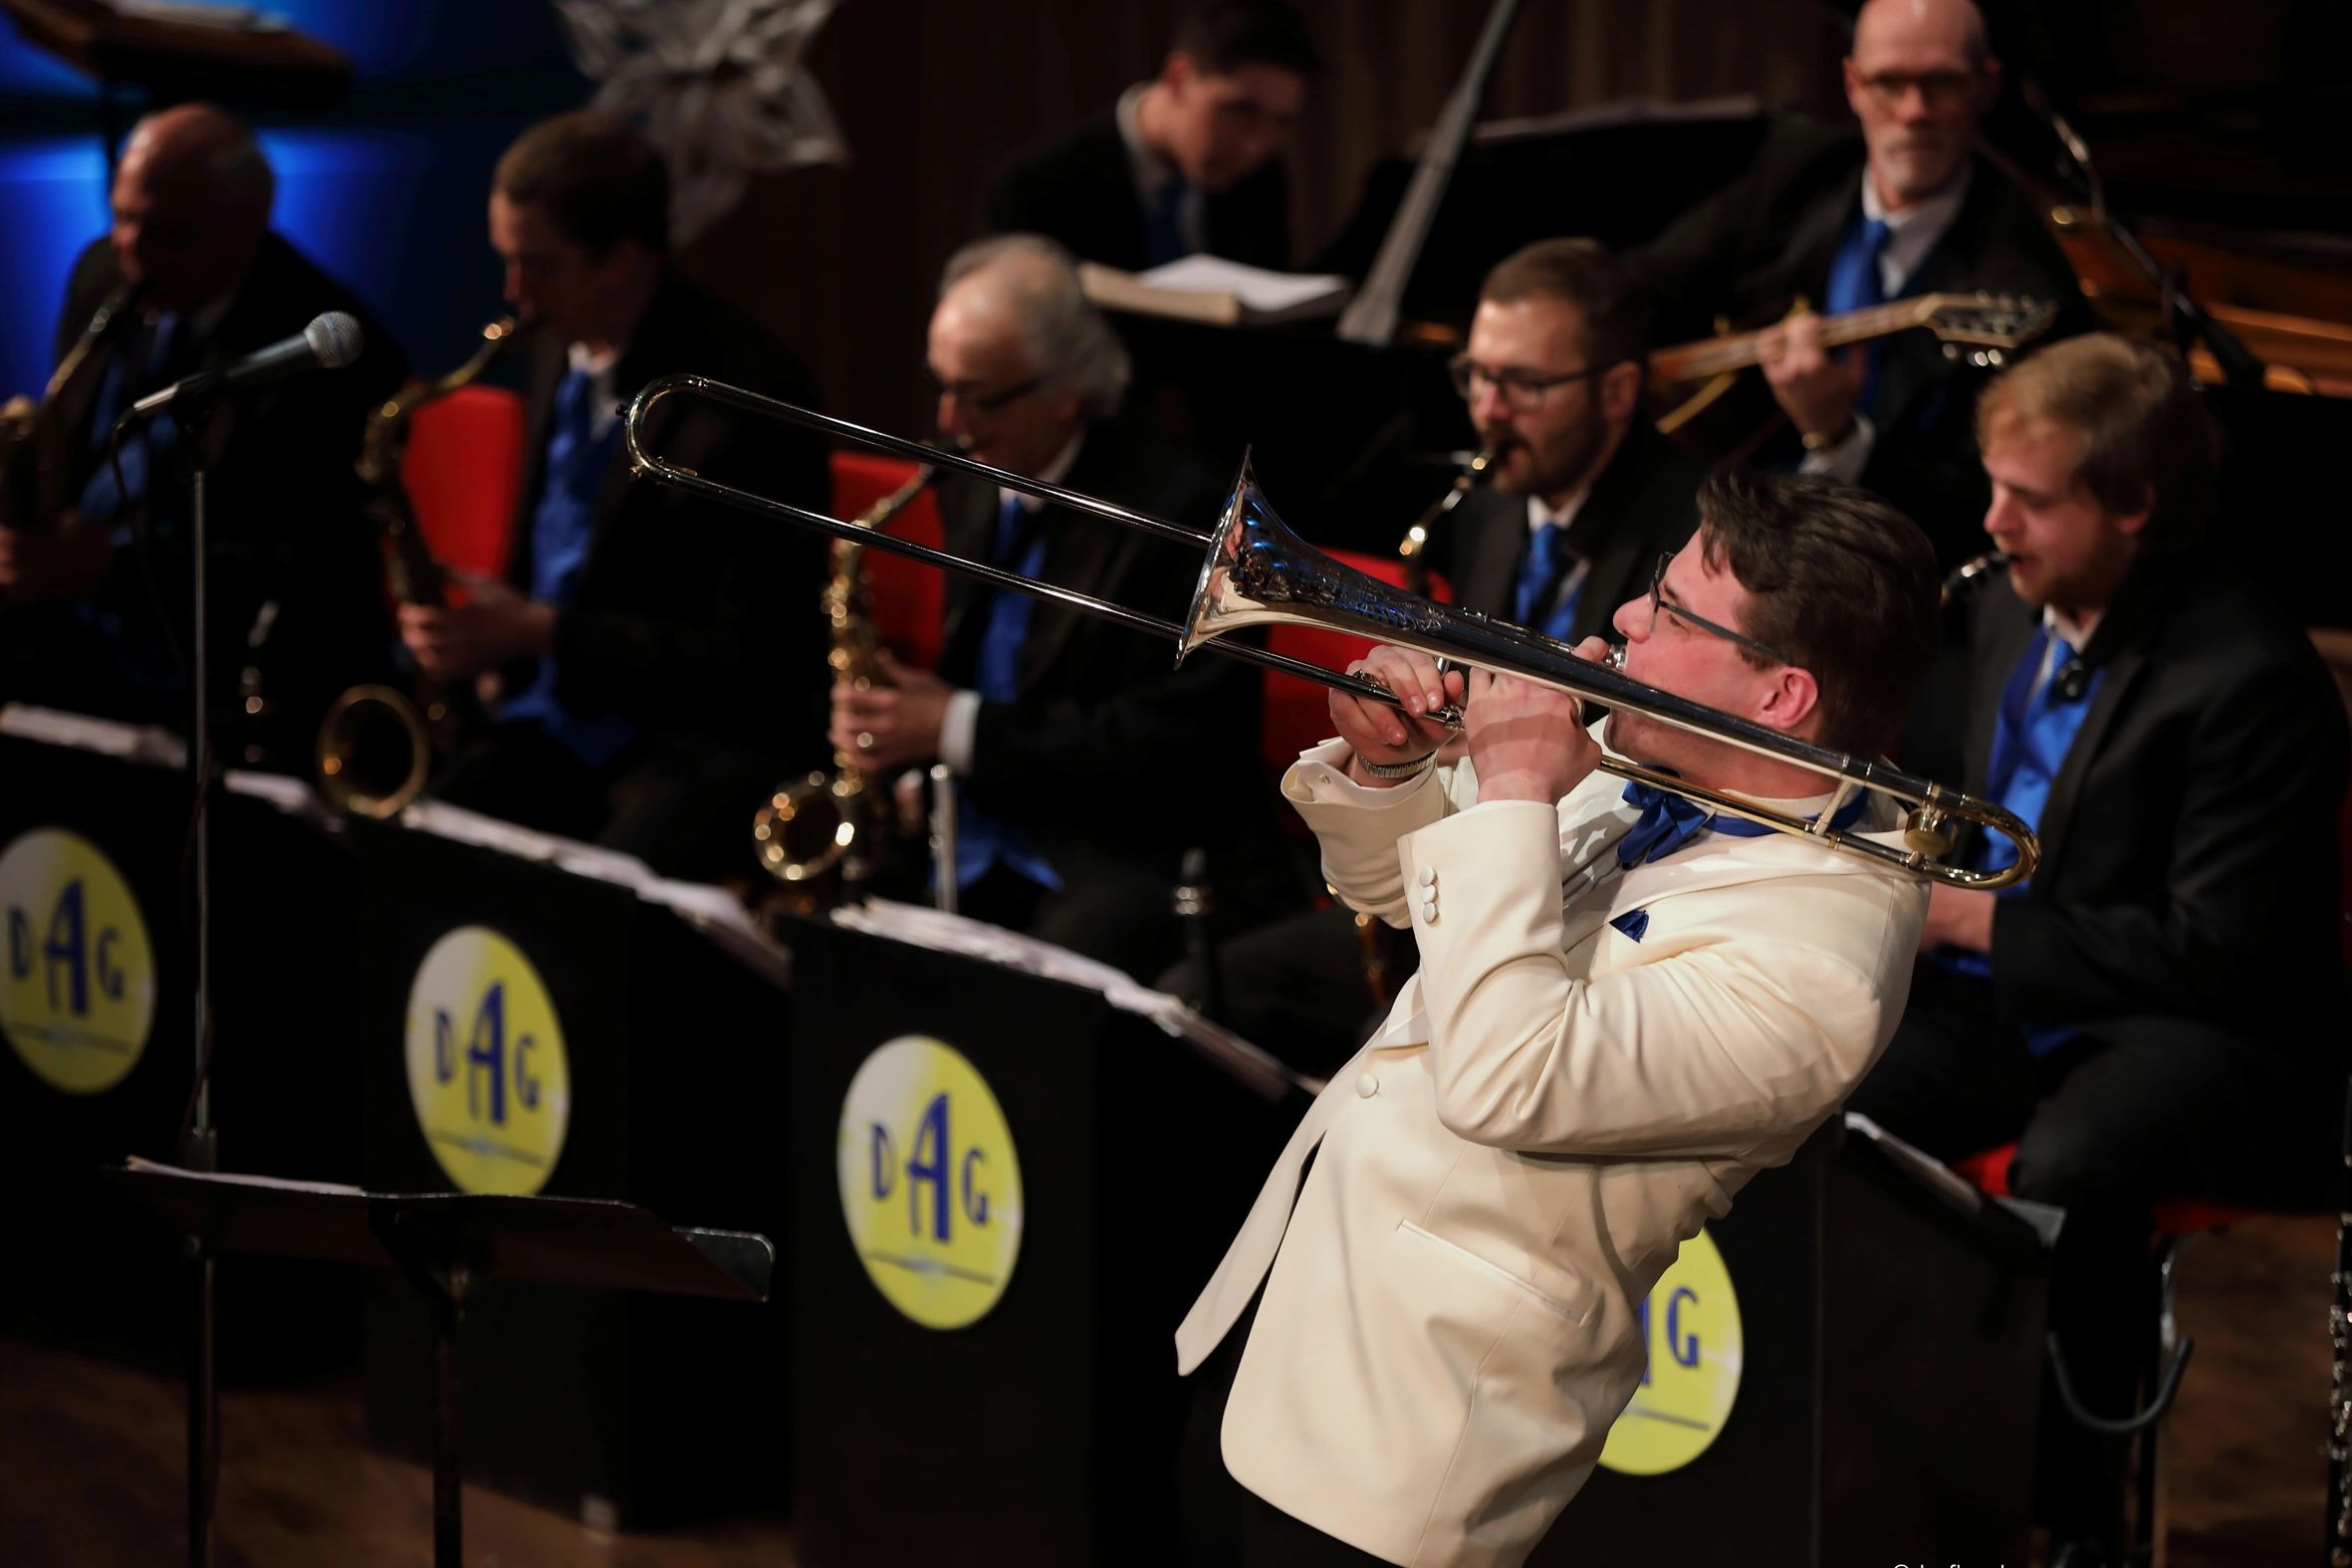 Dan Gabel, trombone and bandleader with the Abletones Big band